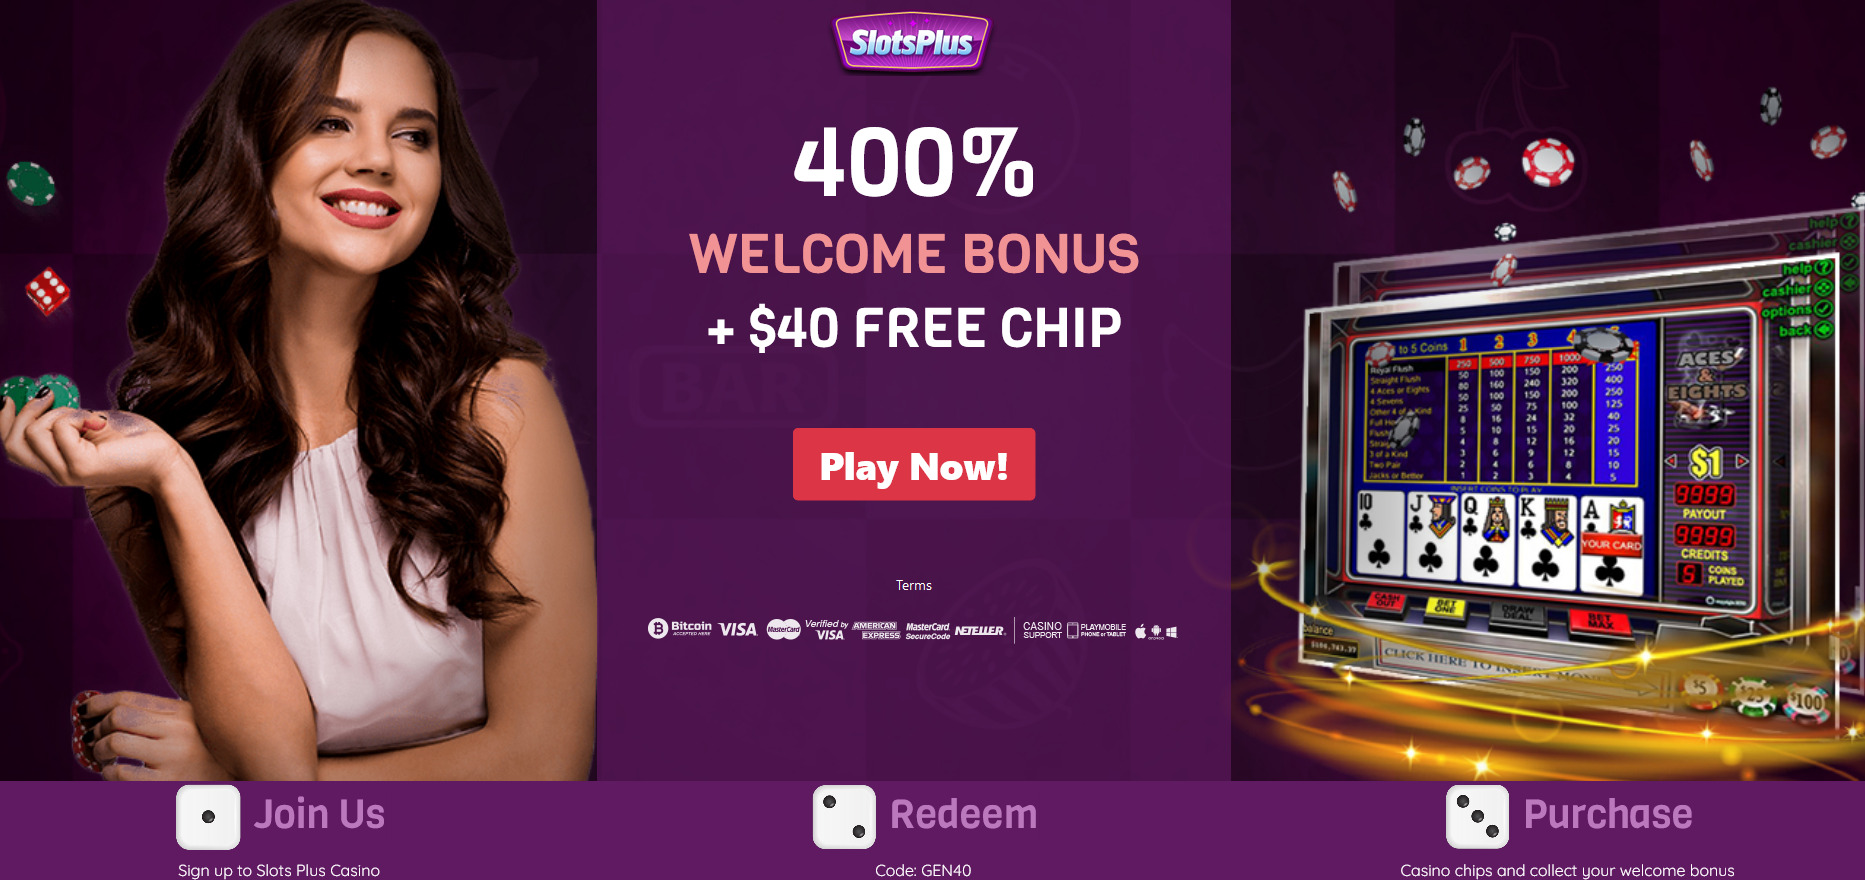 Slots Plus Casino - 400% WELCOME BONUS | + $40 FREE CHIP